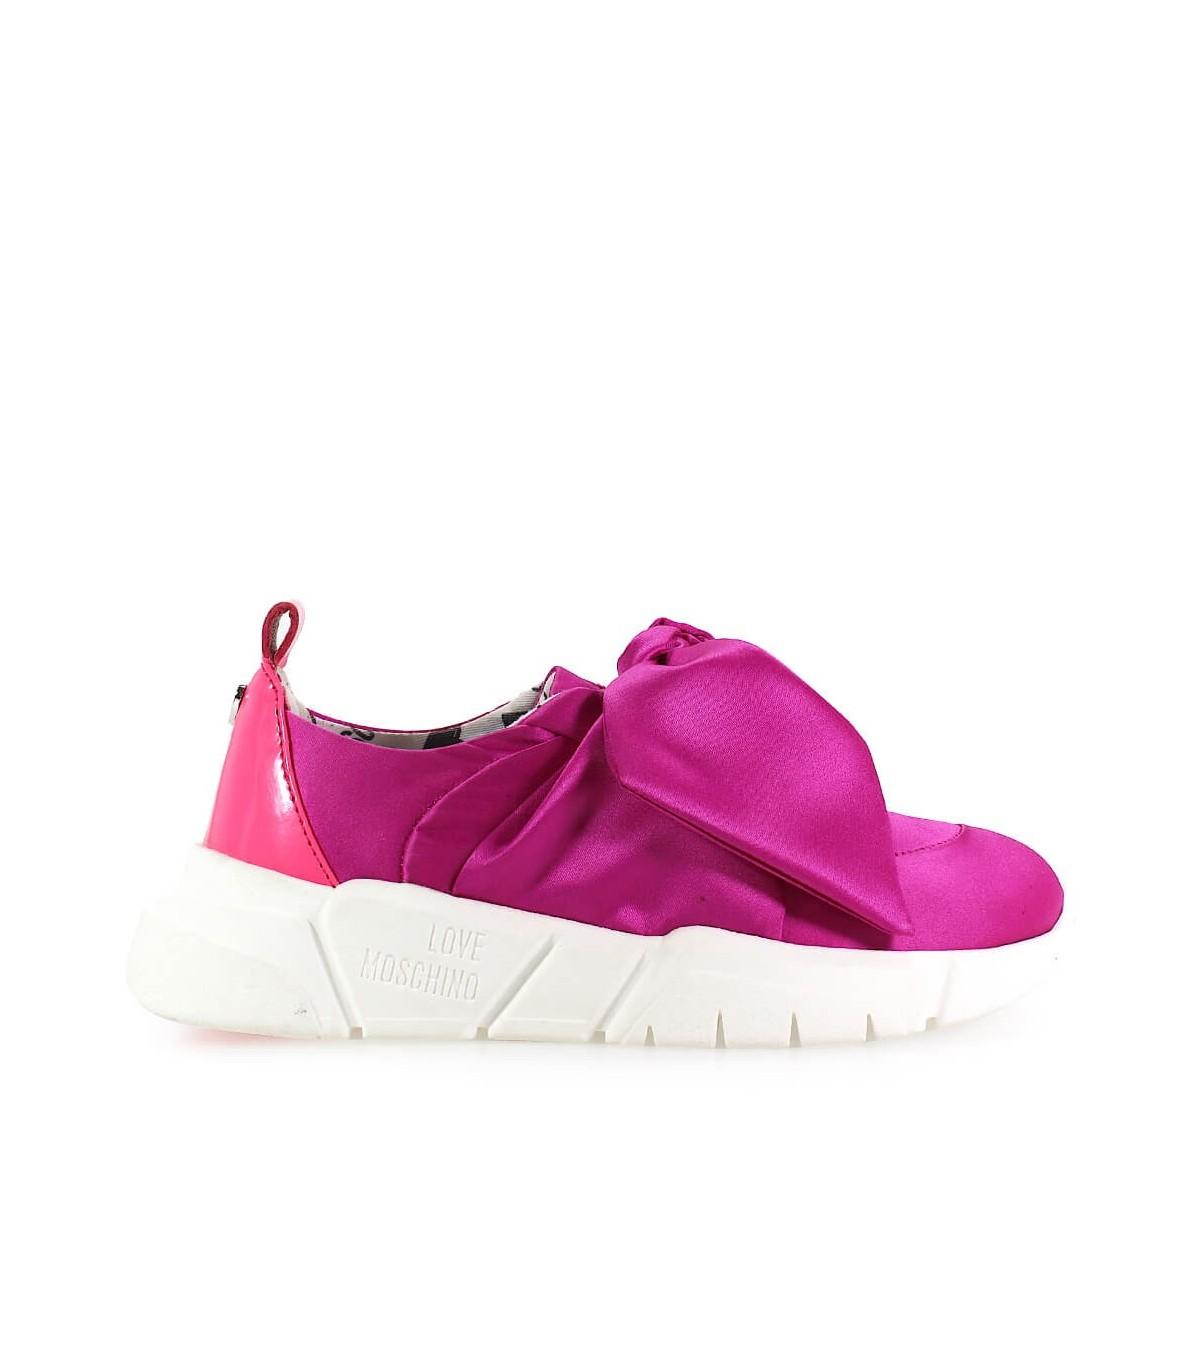 Love Moschino Fuchsia Satin Bow Sneaker in Pink | Lyst